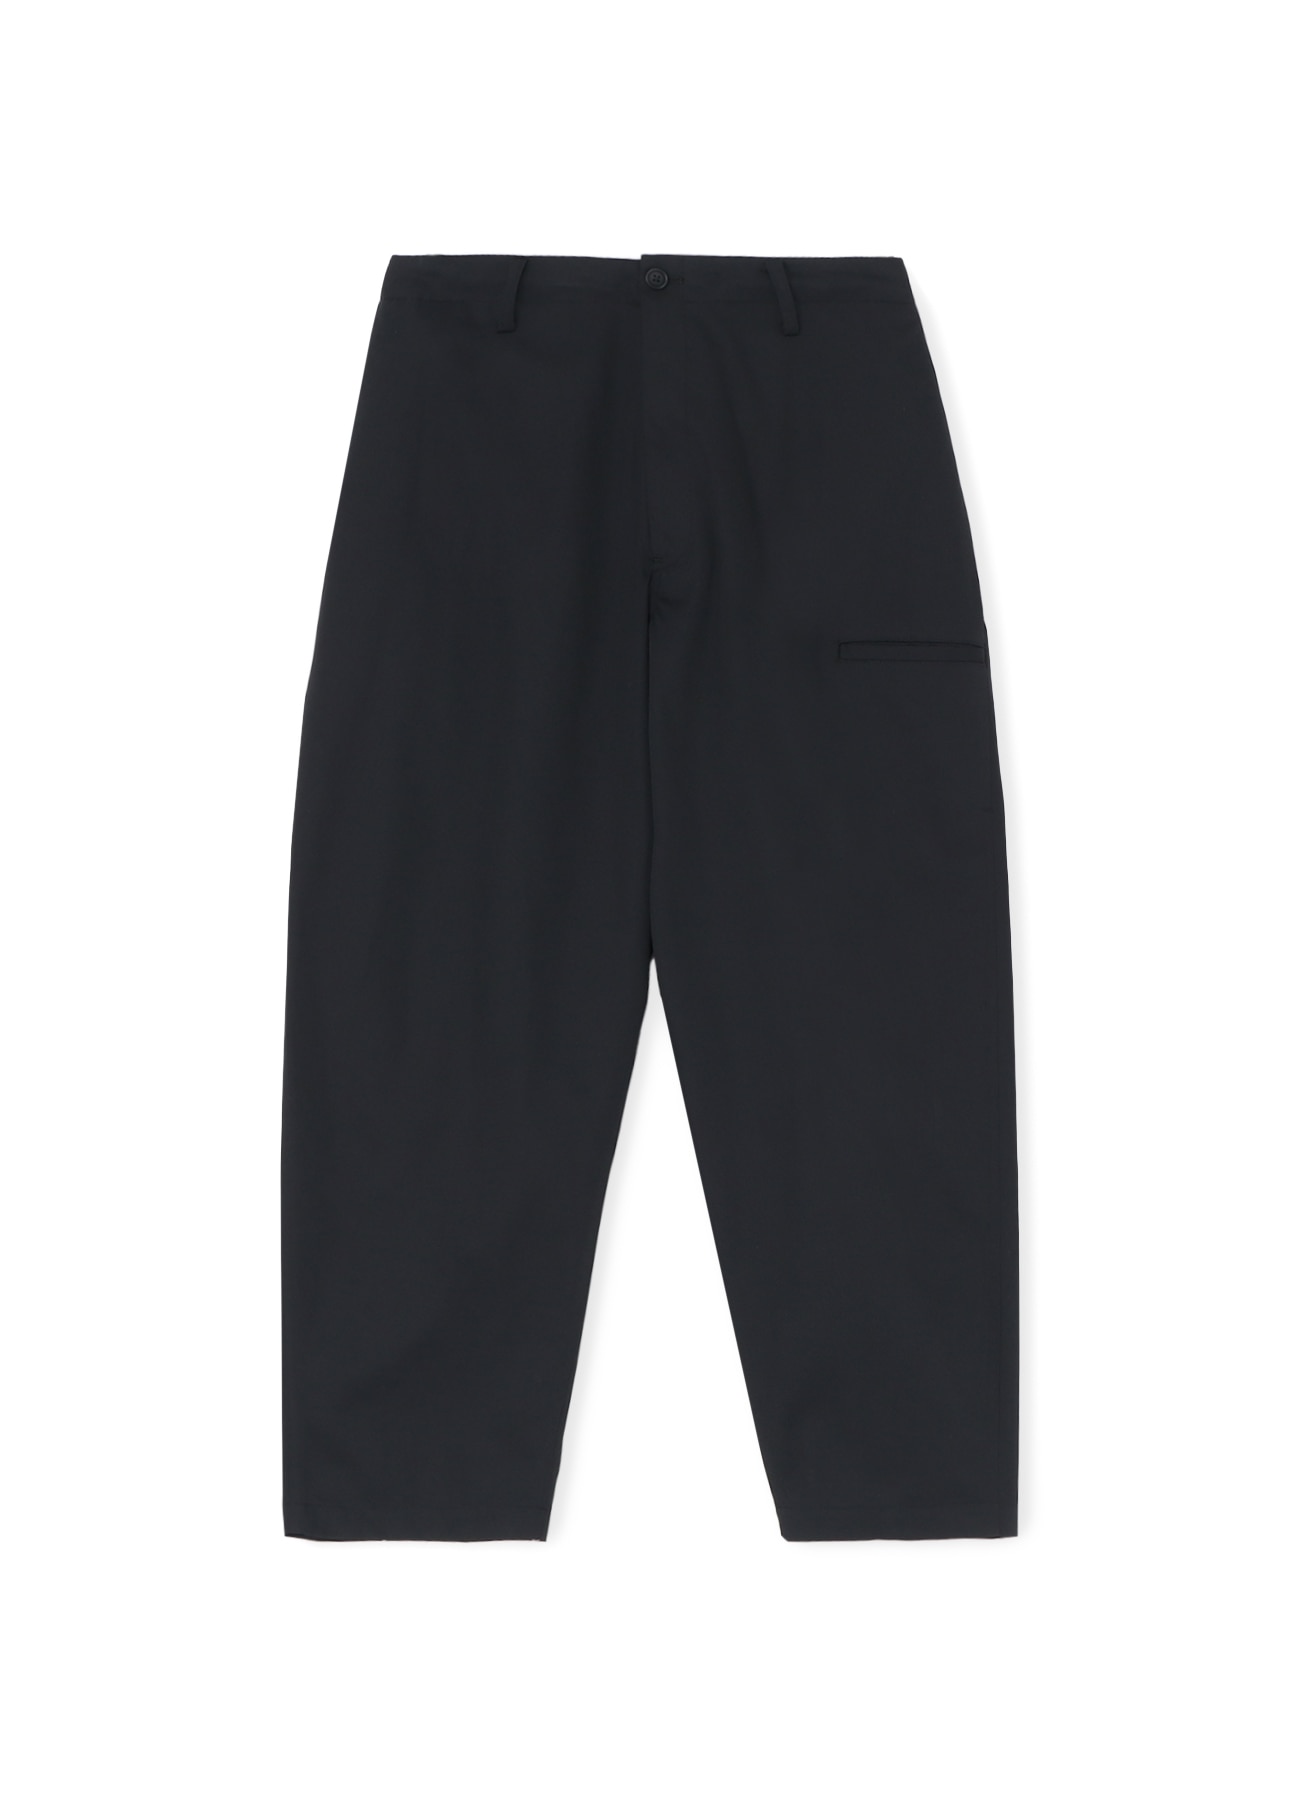 Black Polyester Sport Pants by Versace Underwear on Sale